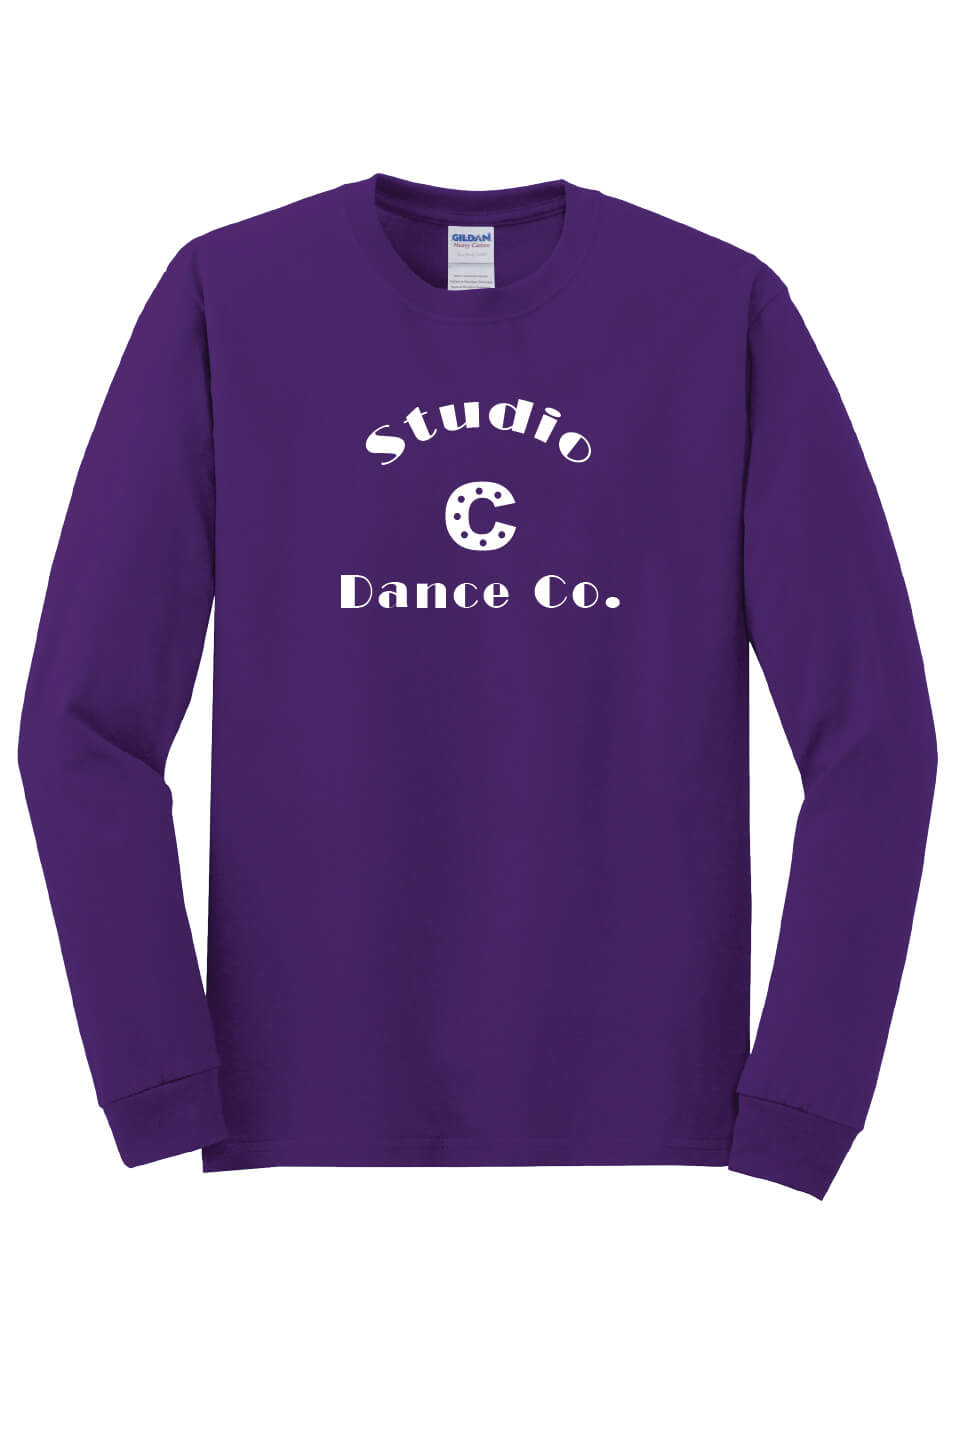 Studio C Long Sleeve T-Shirt (Youth) purple